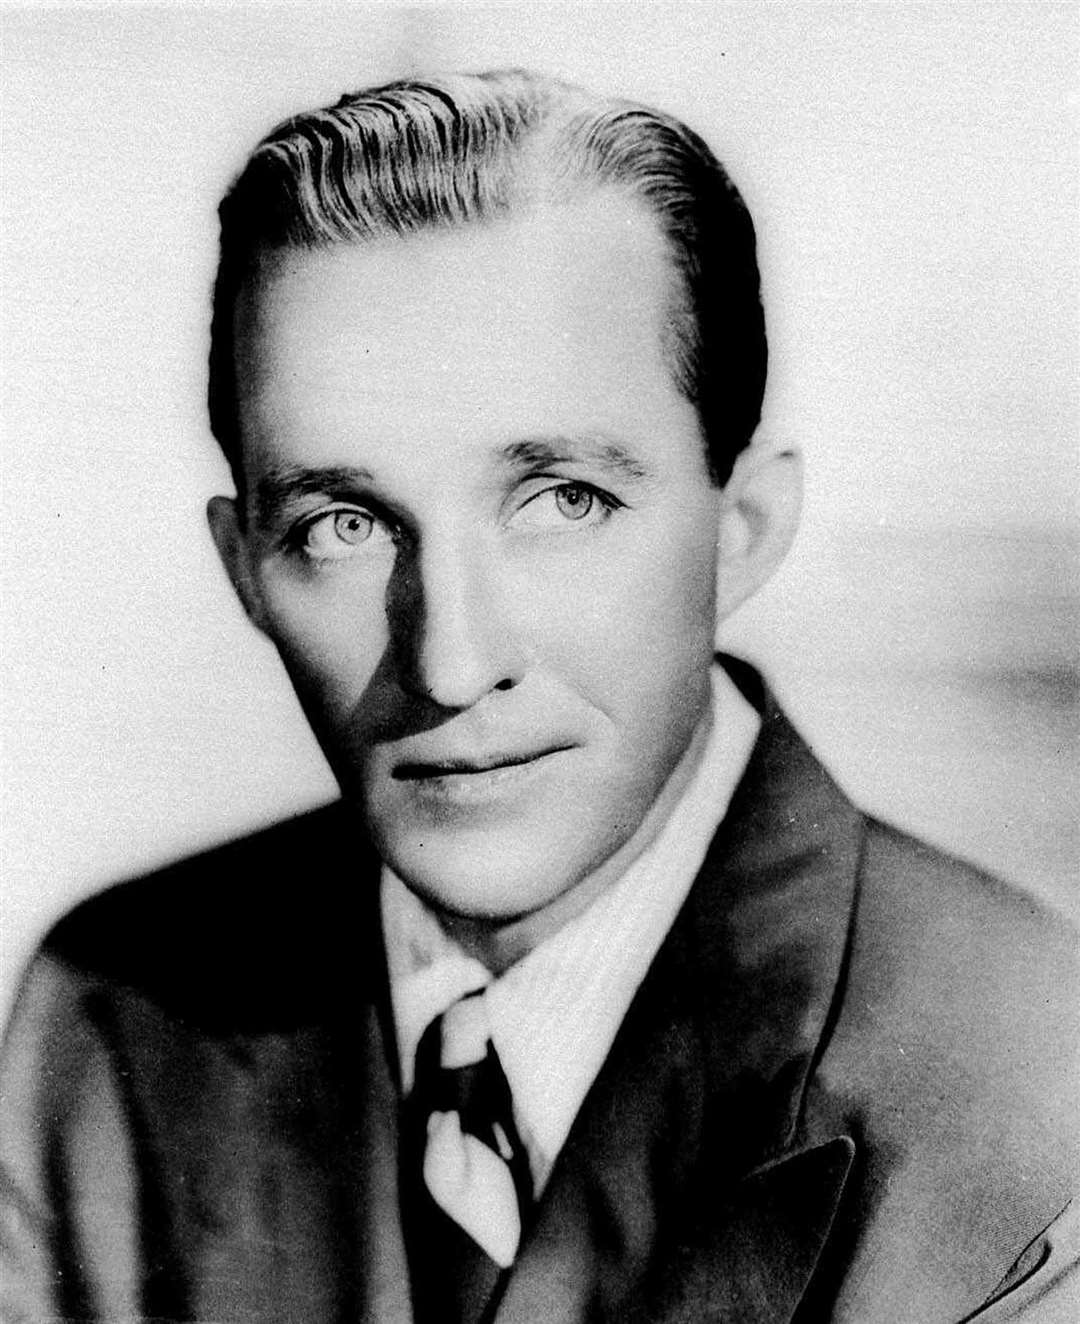 Bing Crosby in October 1942